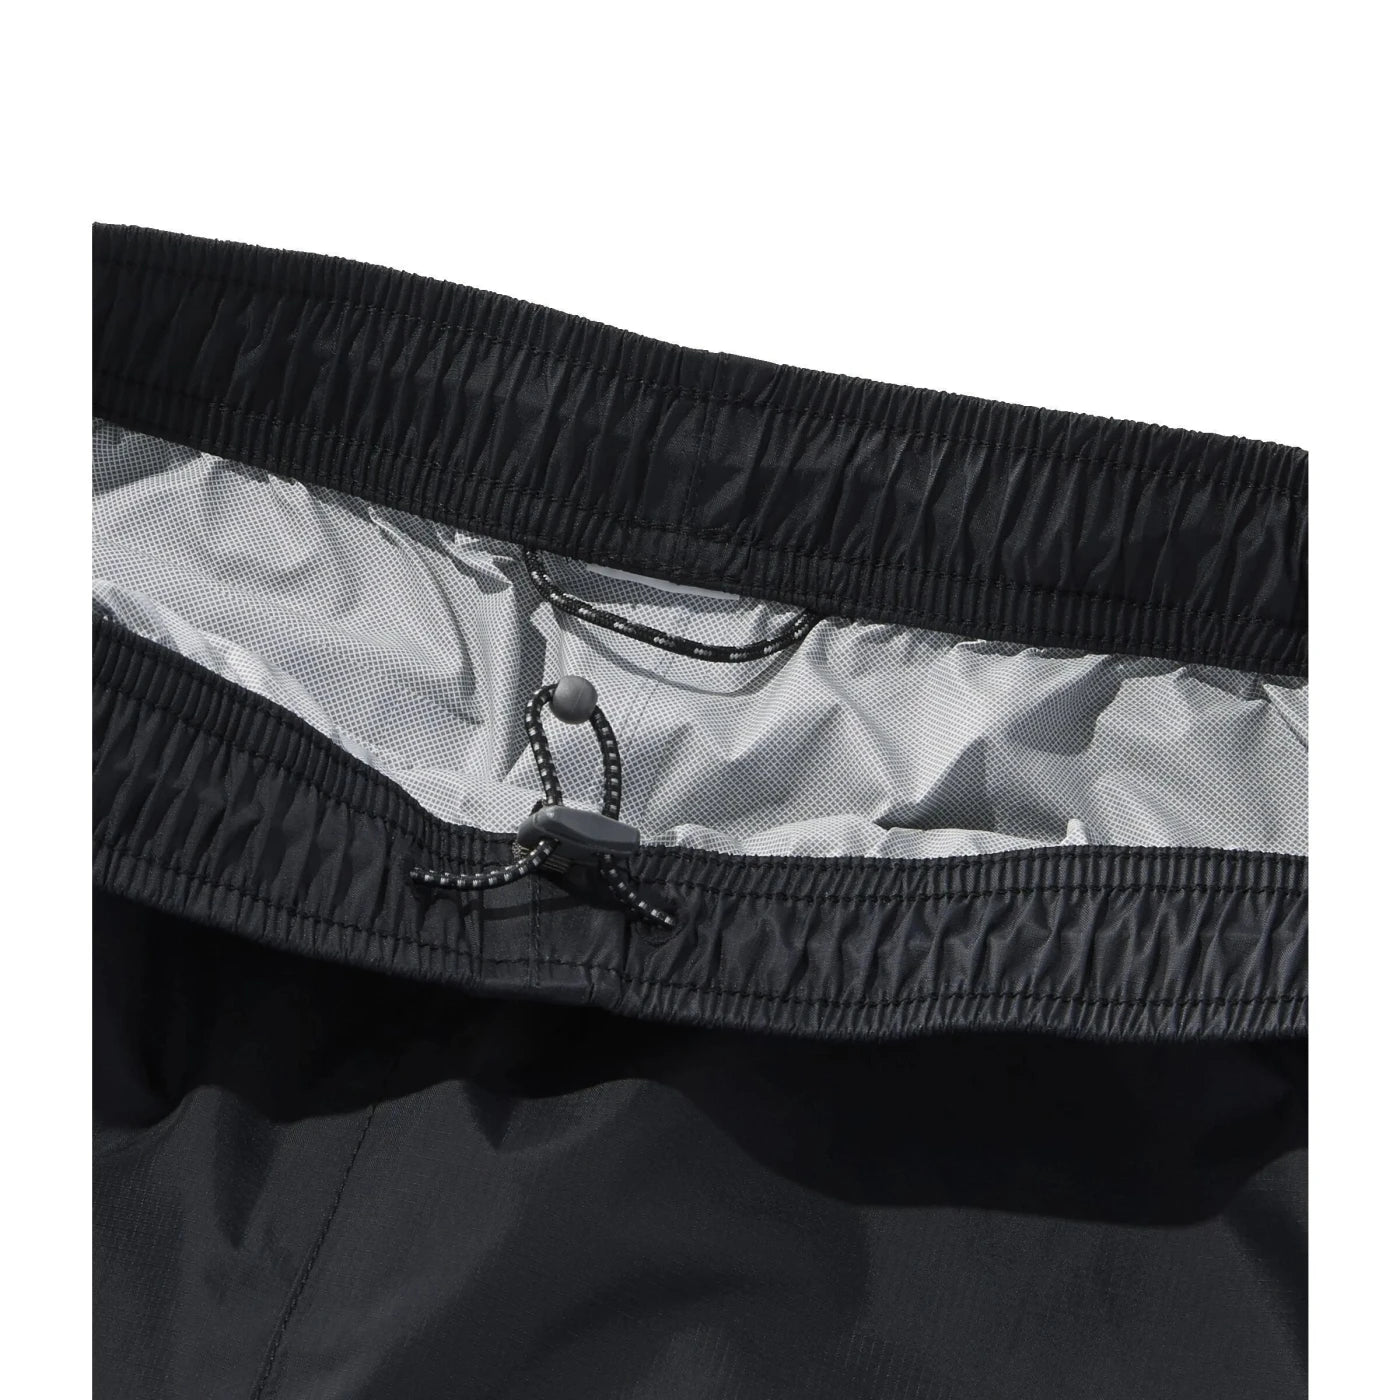 L.L. Bean M's Trail Model Rain Pants, Black, view of waistband